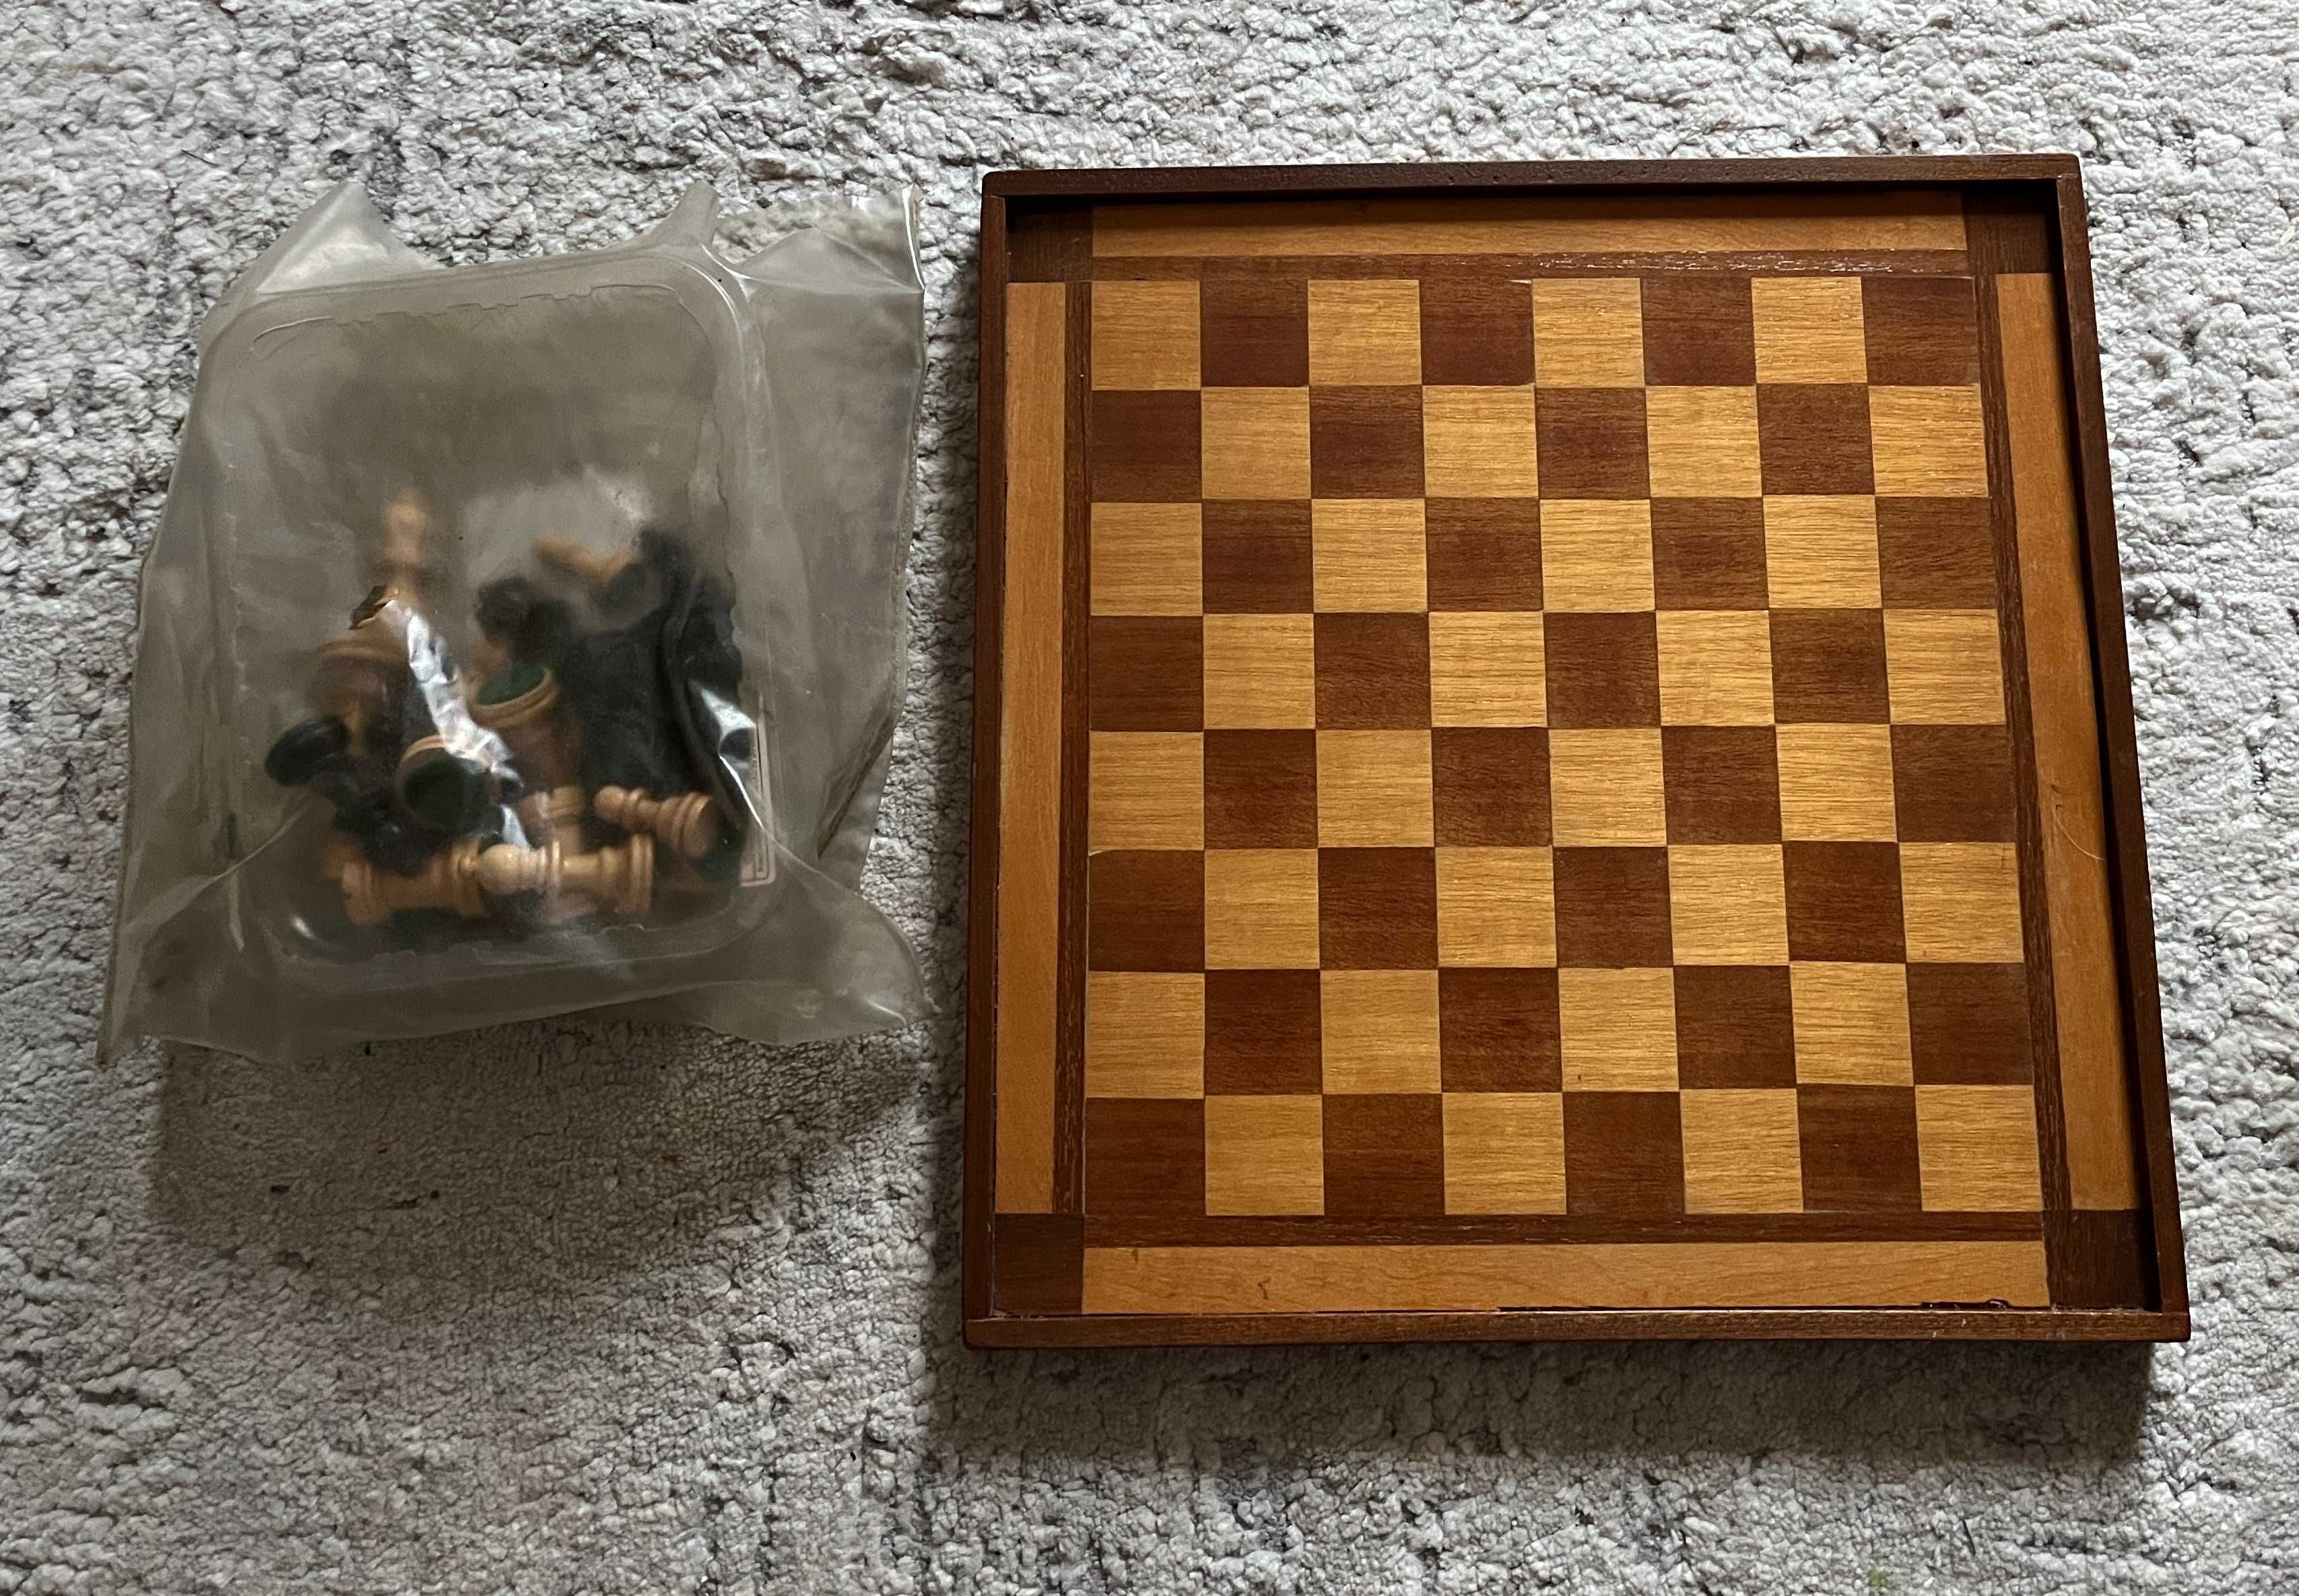 Szachy szachownica i chińczyk